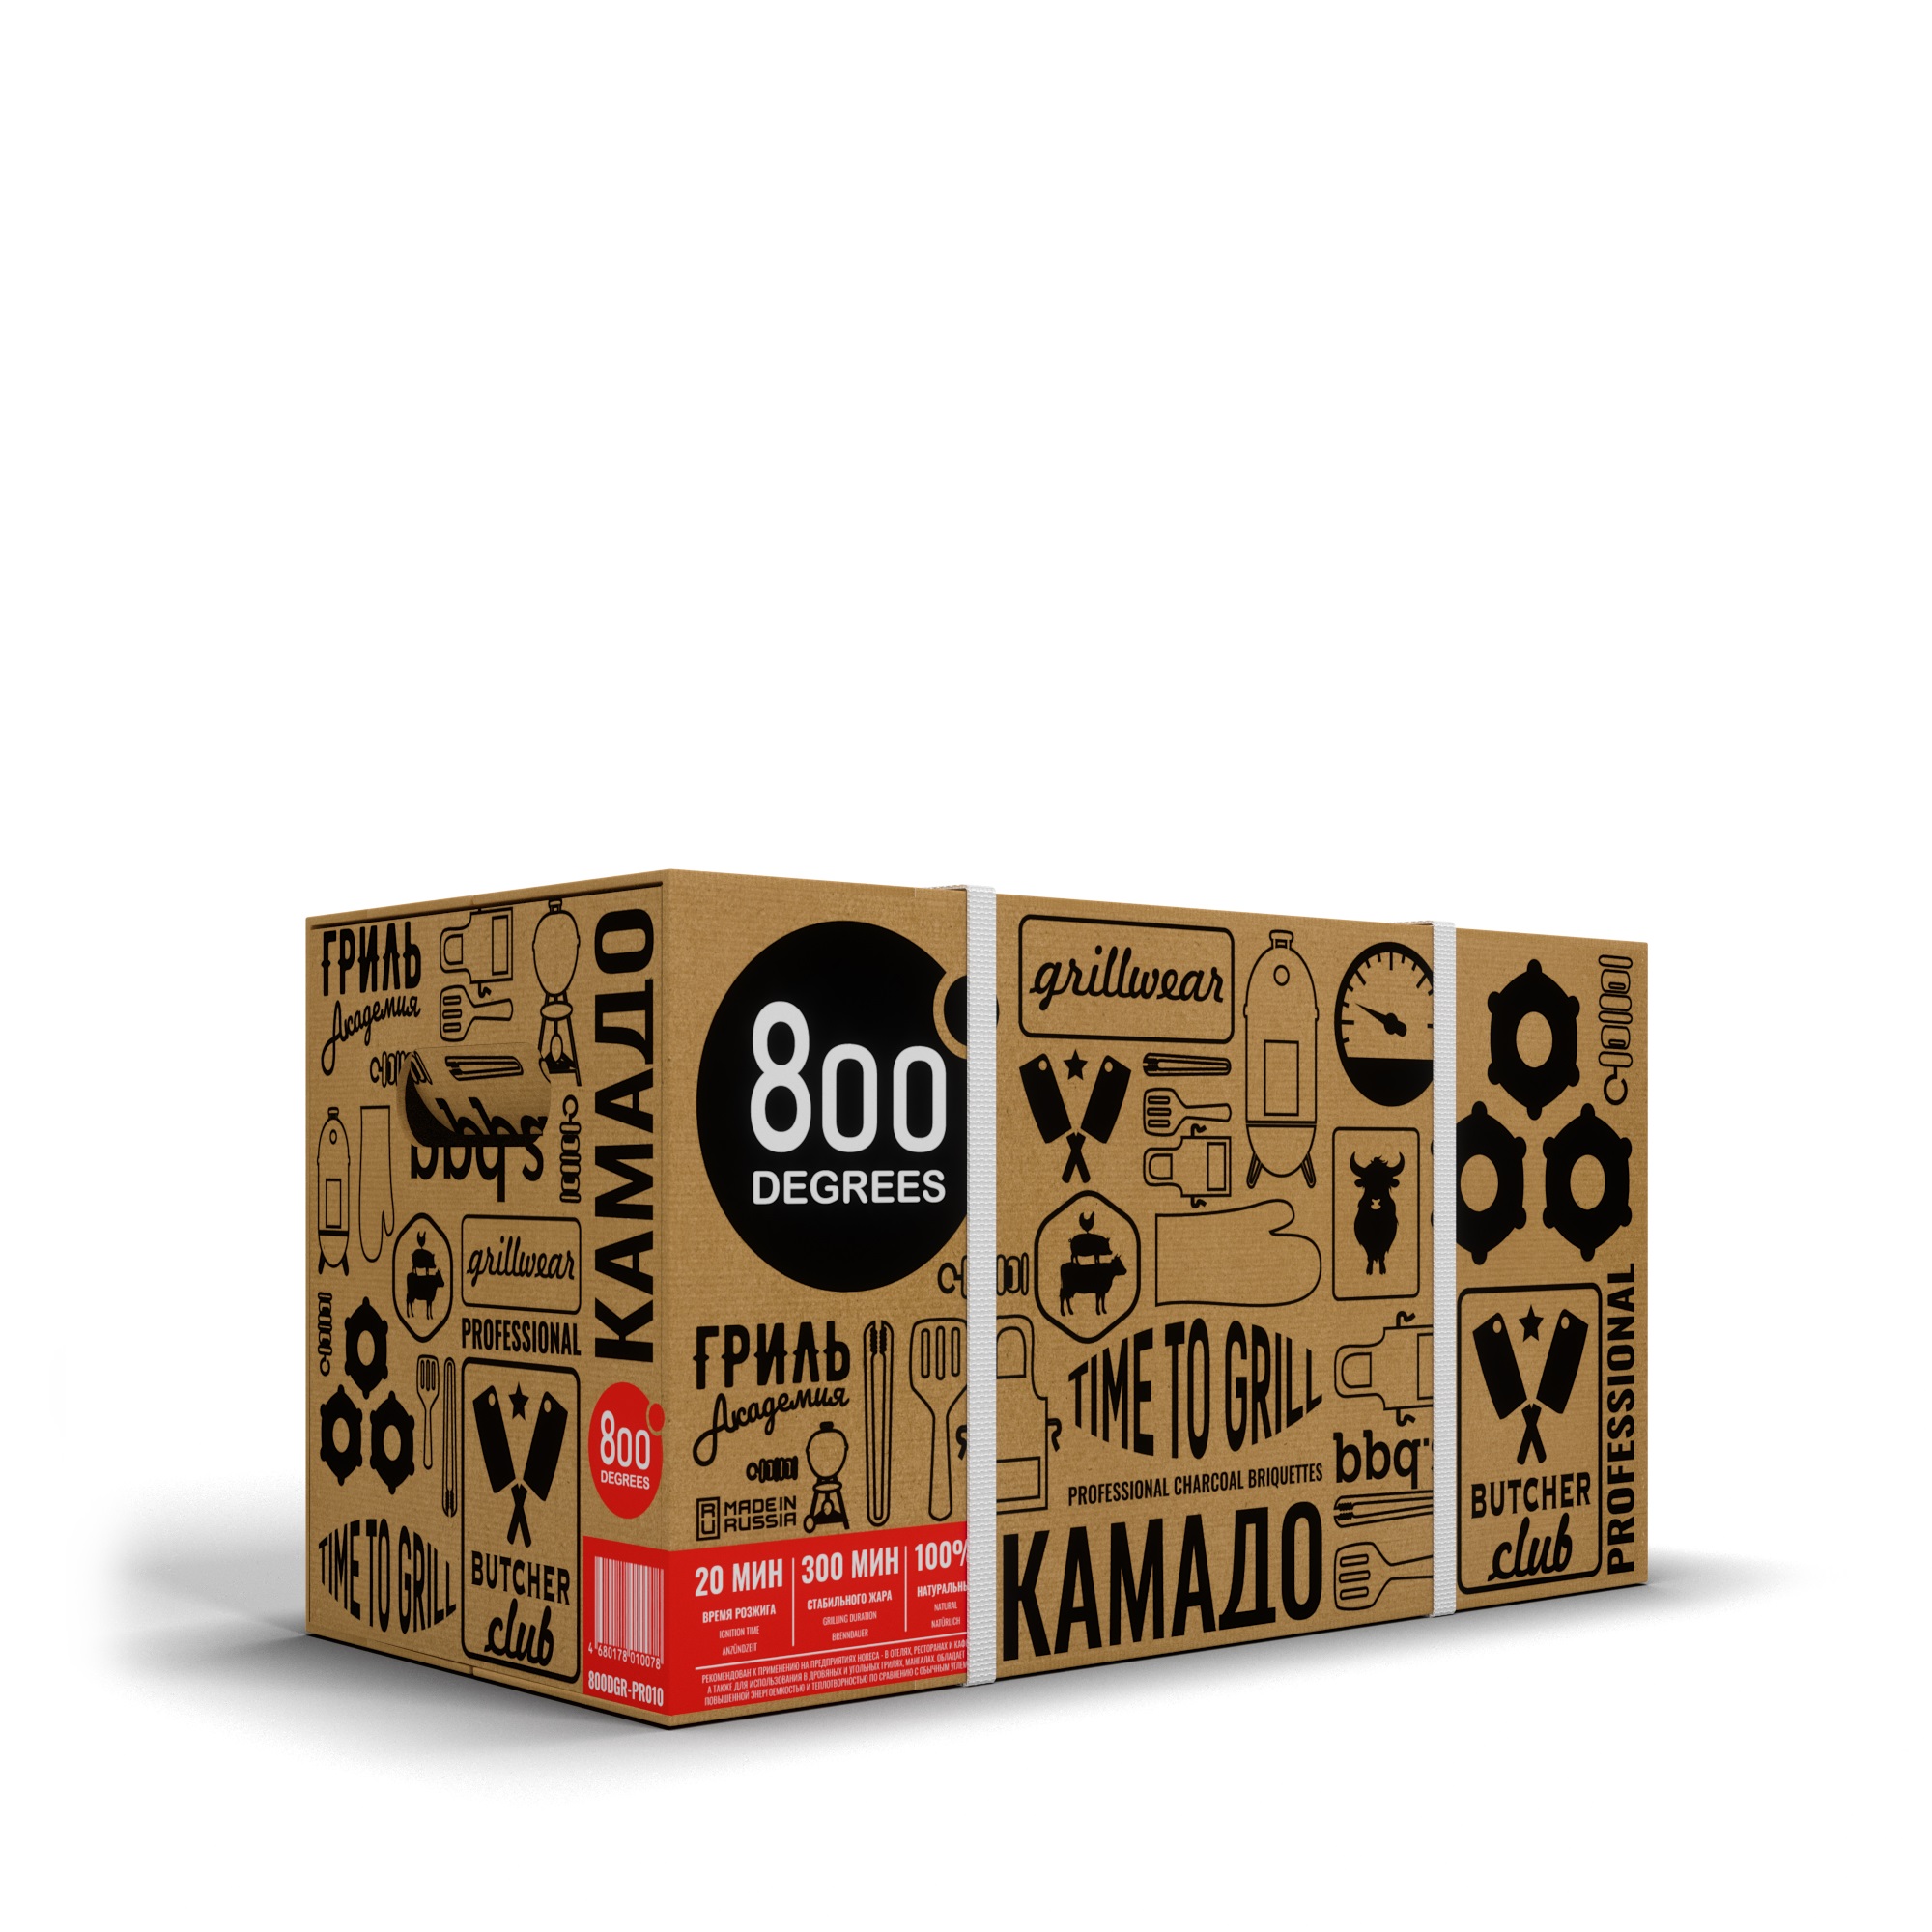 Угольные брикеты Камадо 800 Degrees HoReCa Chef Edition, коробка 10 кг